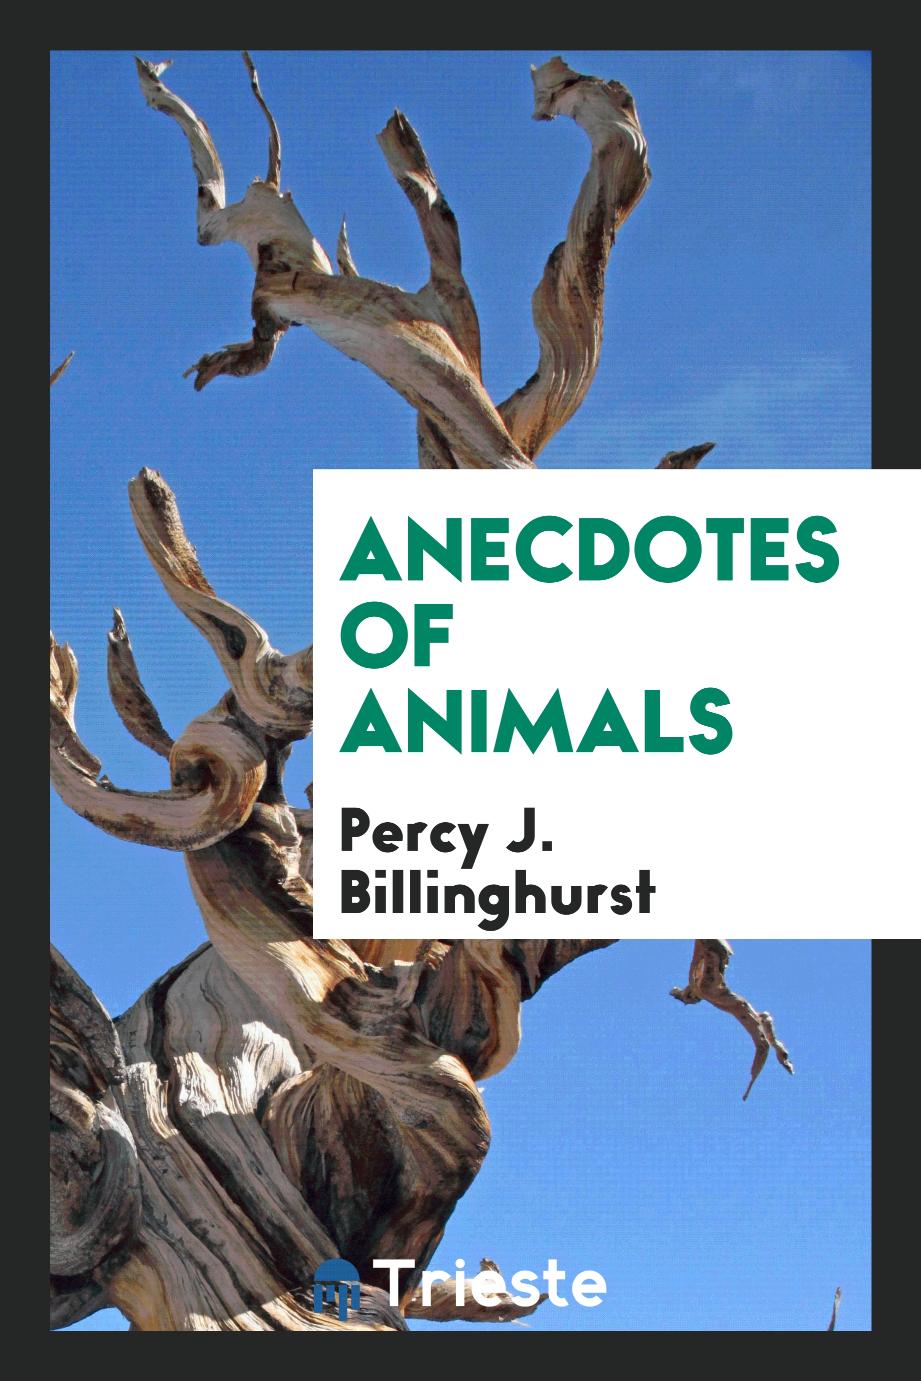 Anecdotes of animals